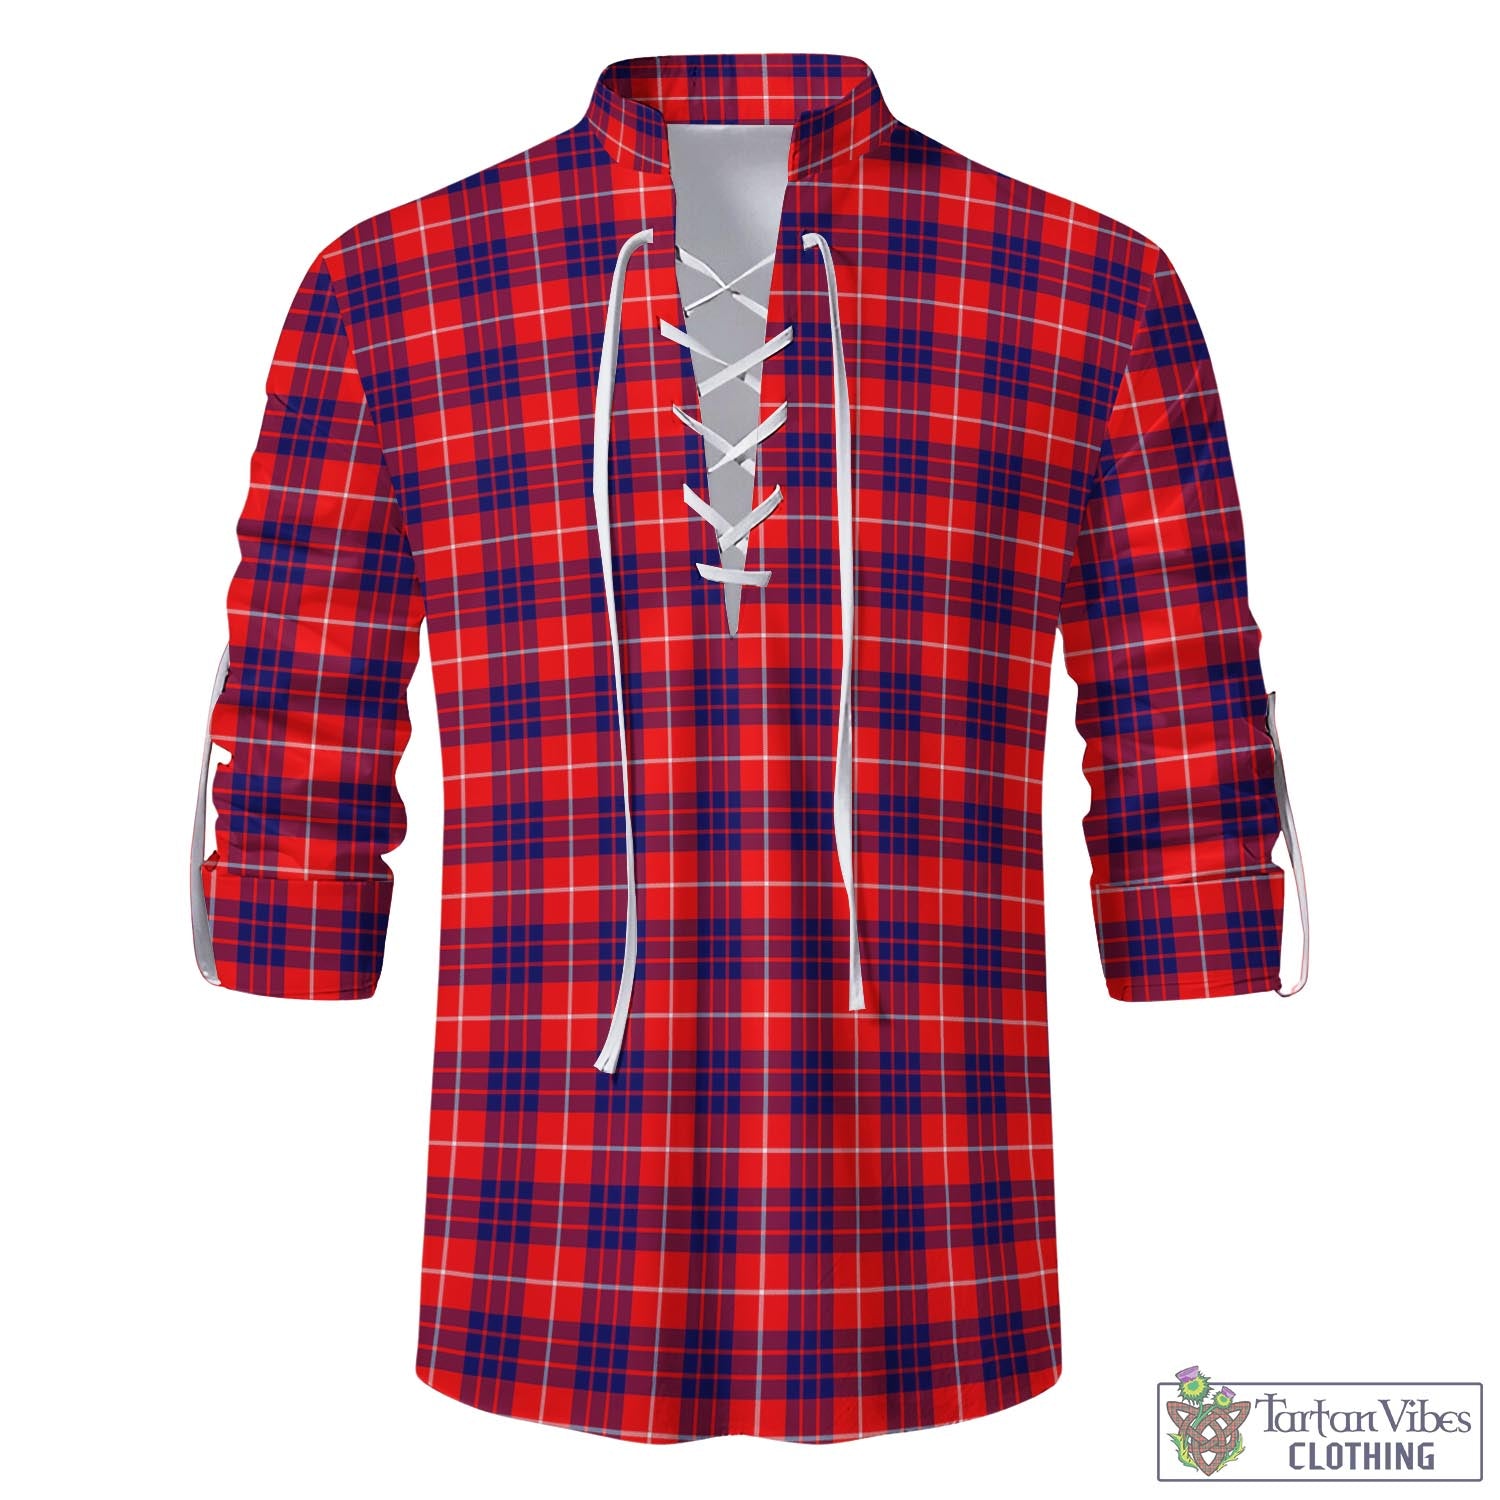 Tartan Vibes Clothing Hamilton Modern Tartan Men's Scottish Traditional Jacobite Ghillie Kilt Shirt